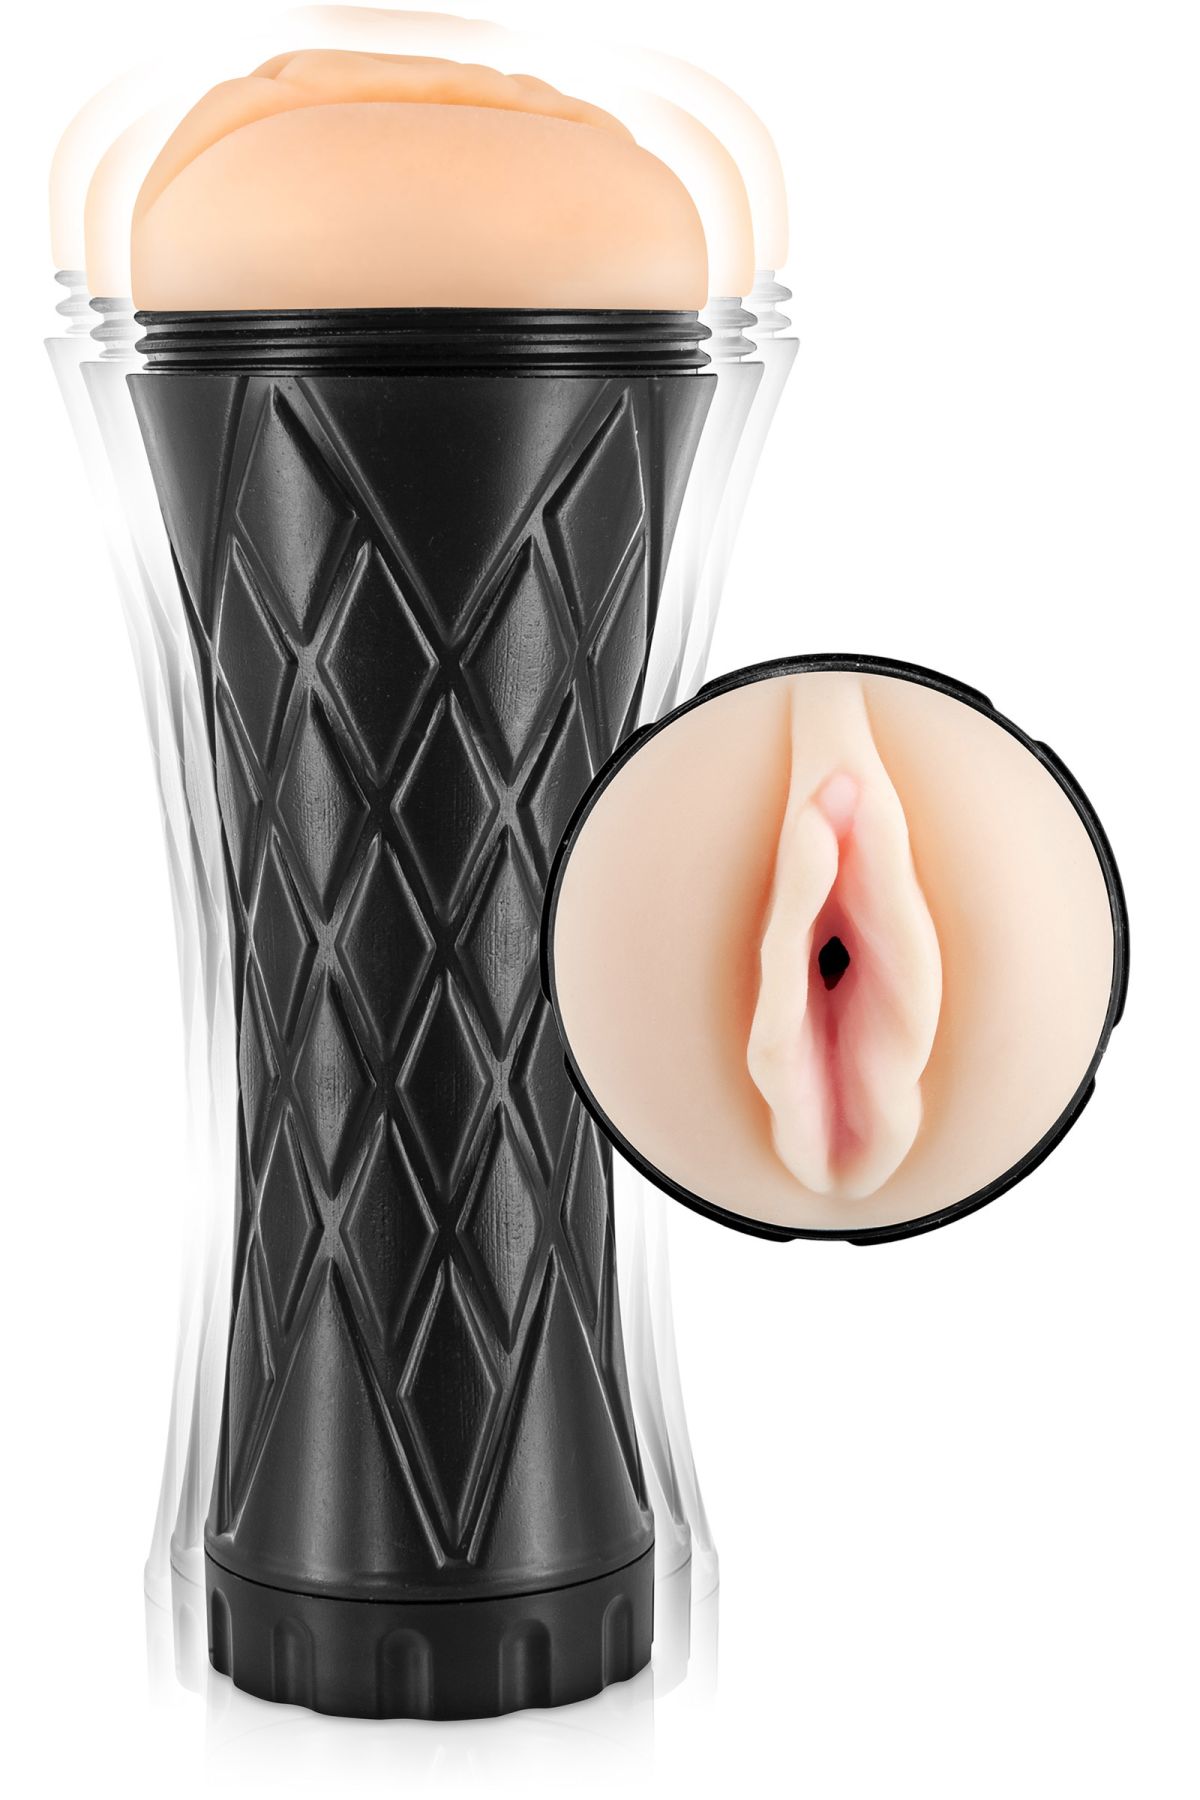 Мастурбатор-вагина Real Body Real Cup Vagina Vibrating